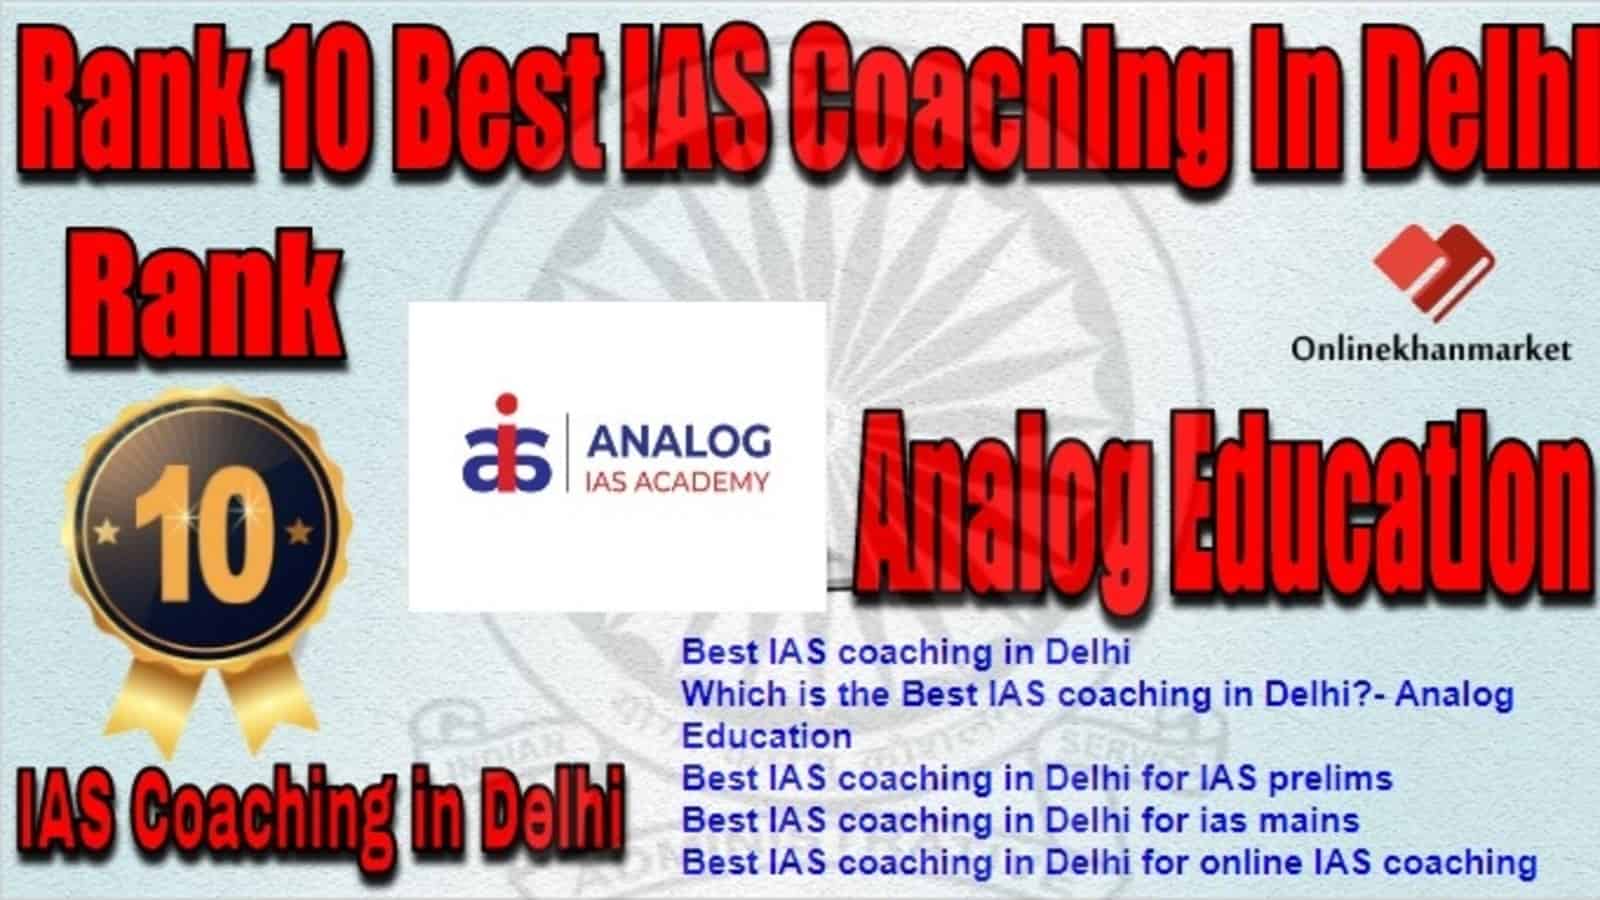 Rank 10 Best IAS Coaching in Delhi